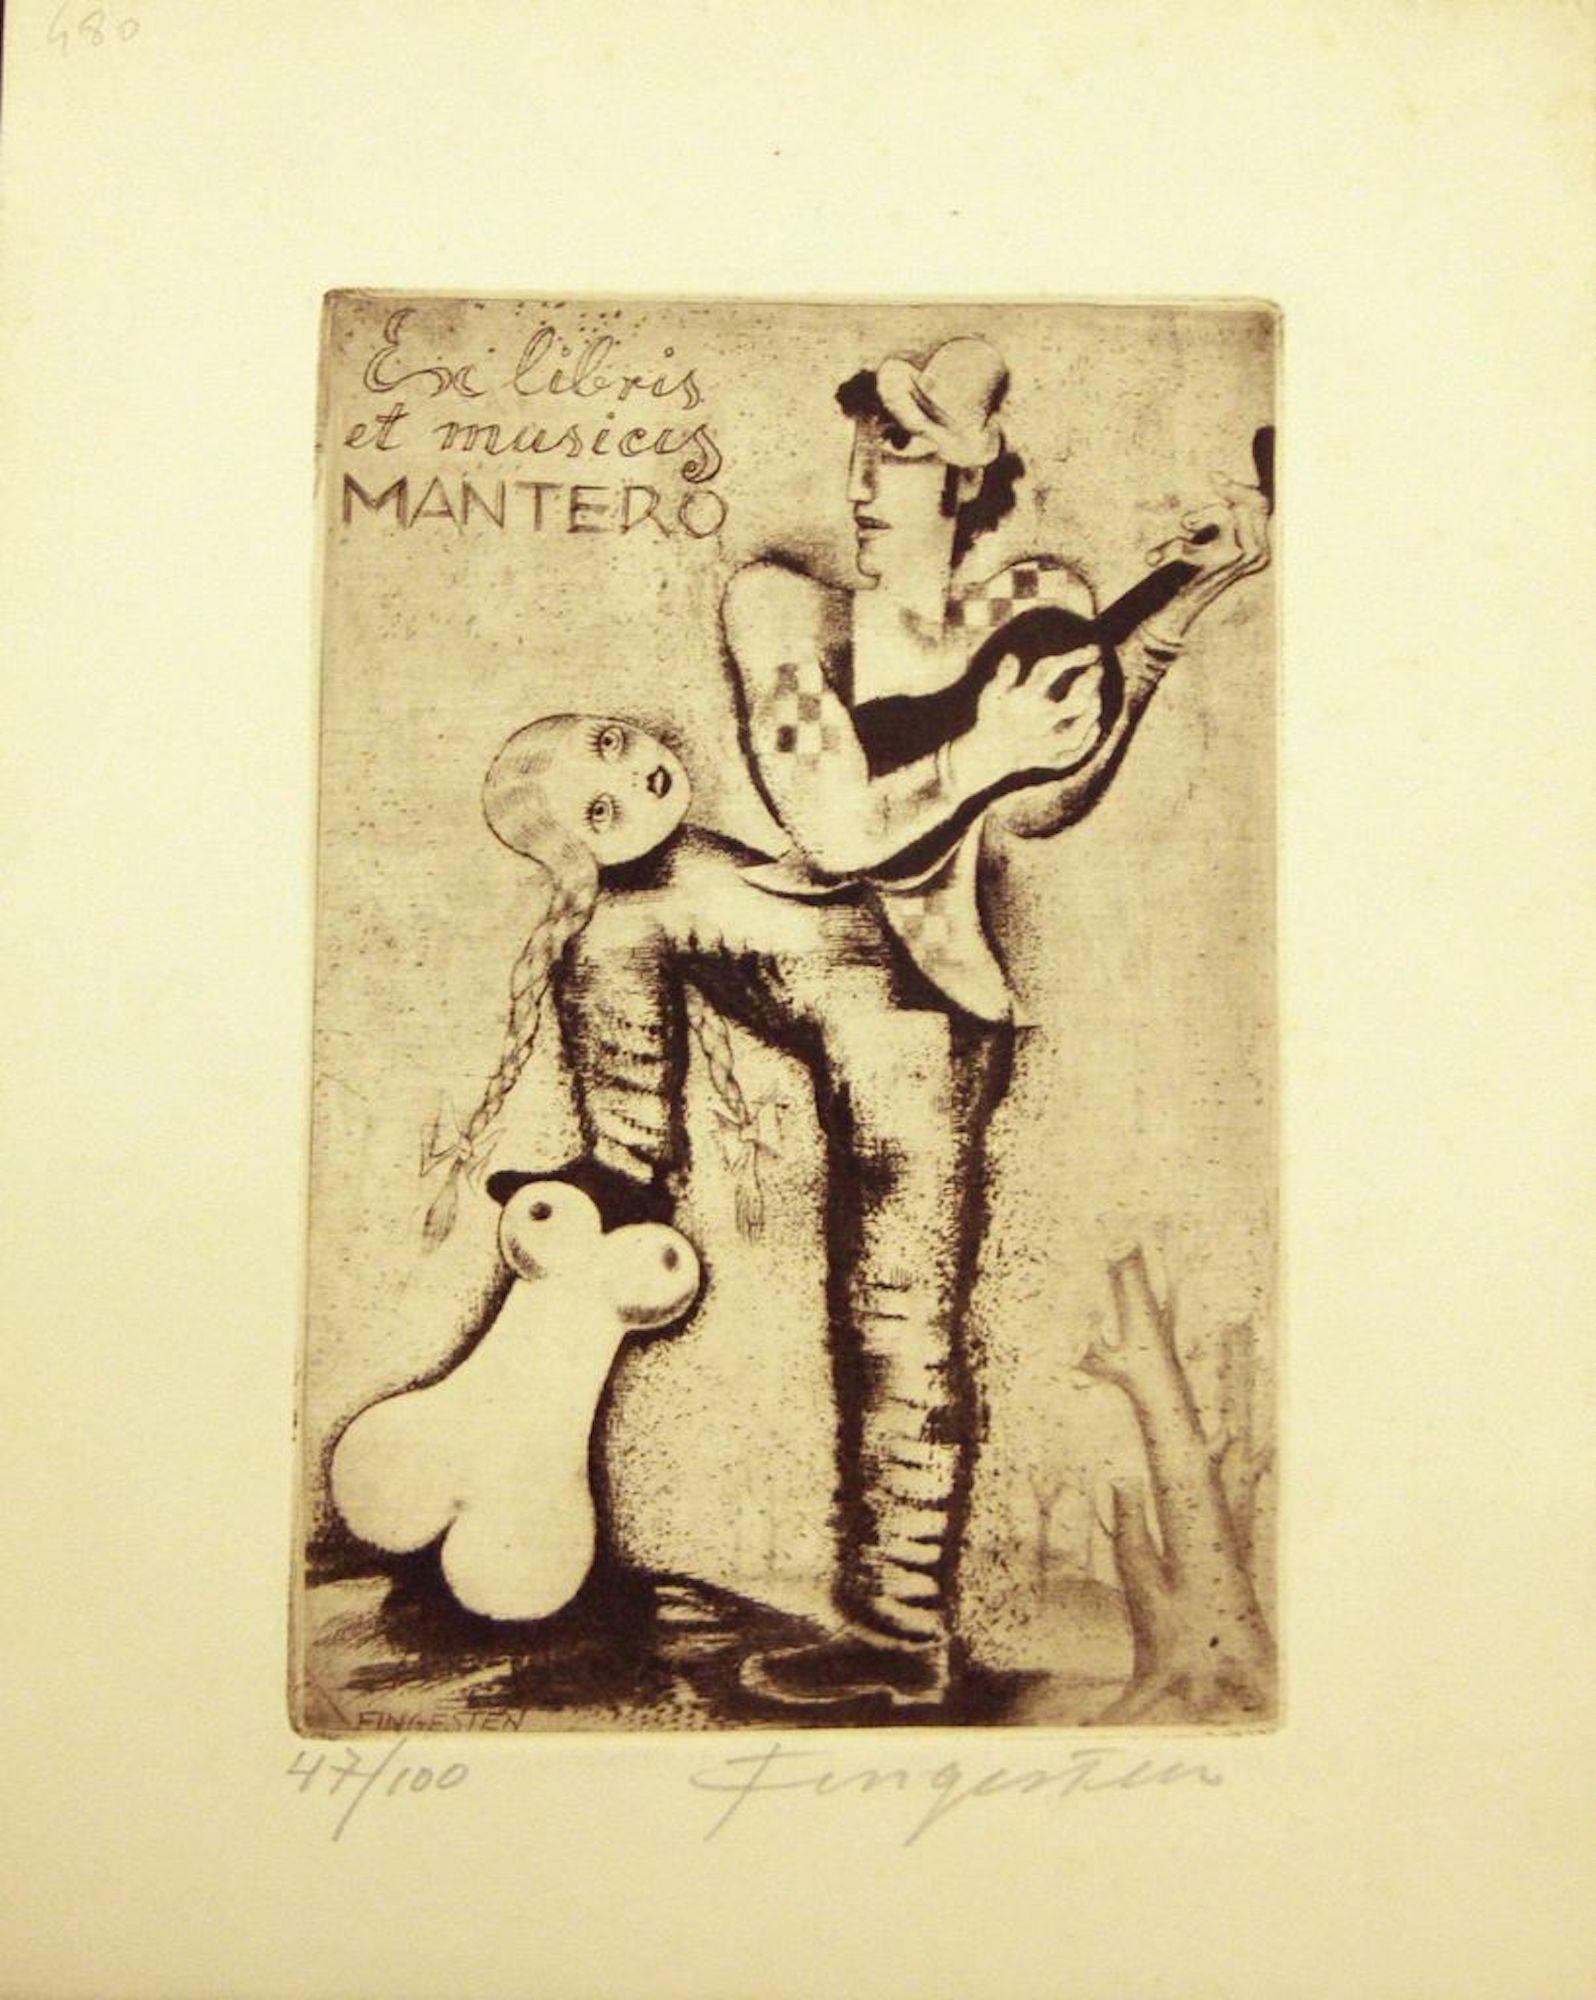 Michel Fingesten Figurative Print - Ex Libris et Musicis Mantero - Original Etching by M. Fingesten - Early 1900